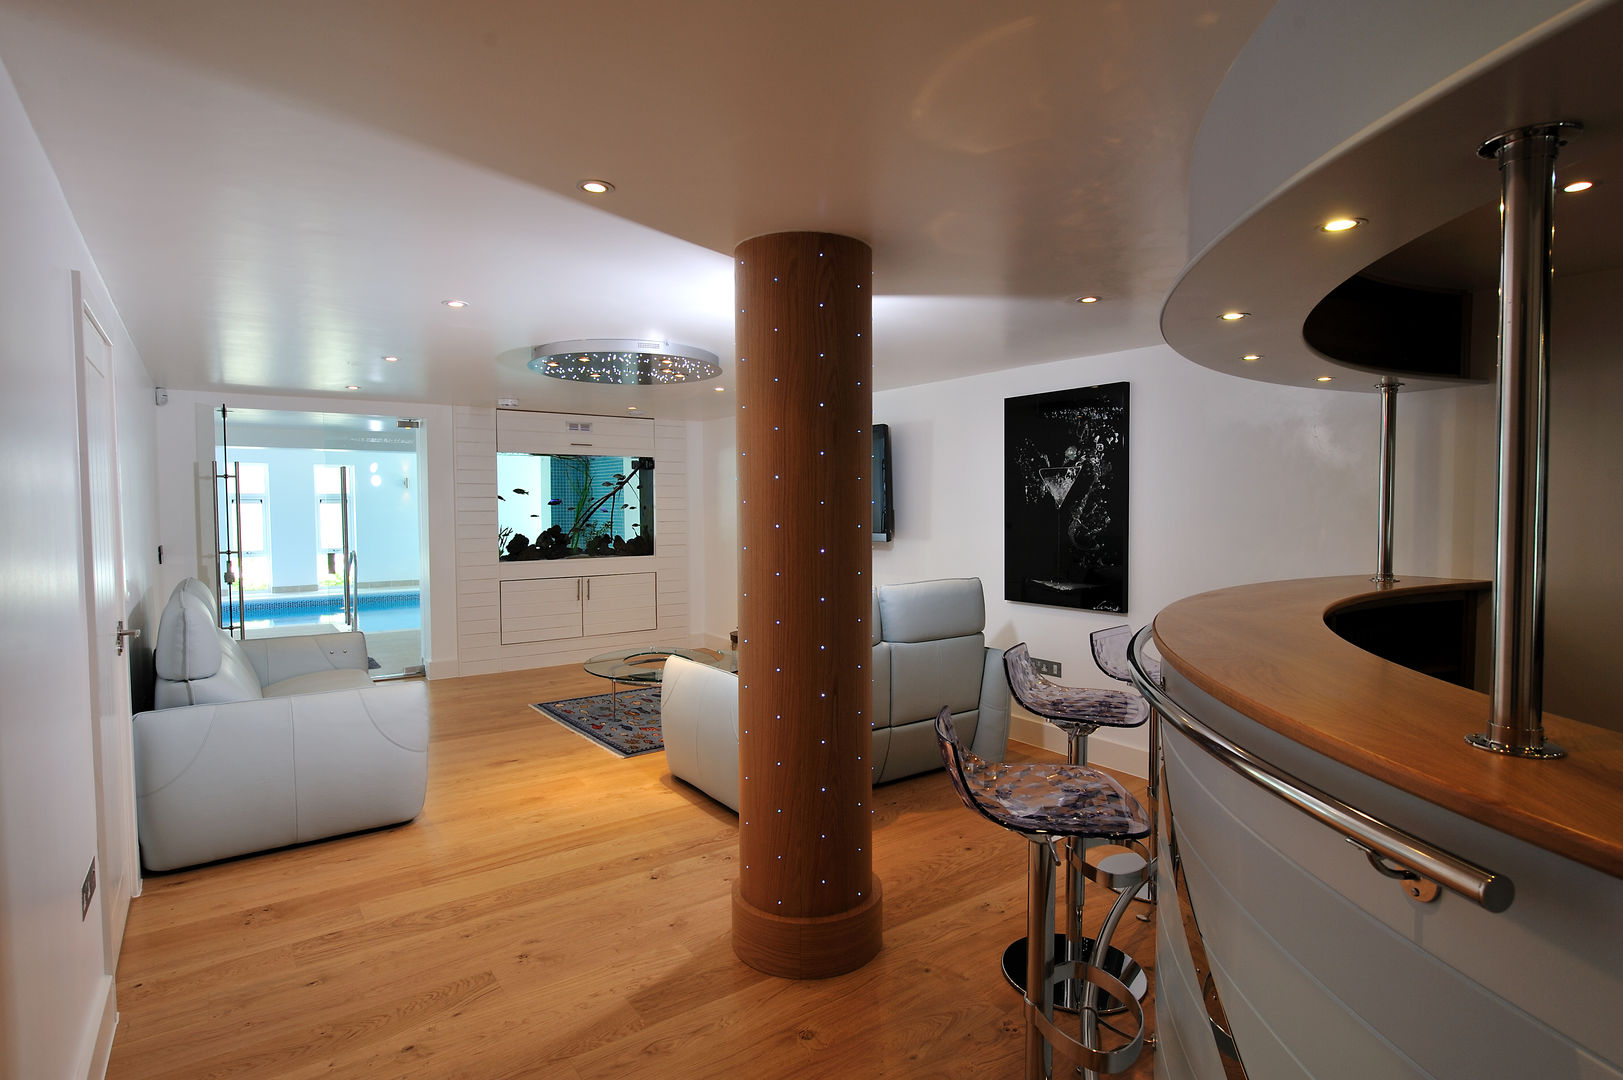 Sea House, Porth | Cornwall, Perfect Stays Perfect Stays Ausgefallener Multimedia-Raum Cinema room,bar,media room,fish tank,holiday home,beach house,interior,lighting,luxury